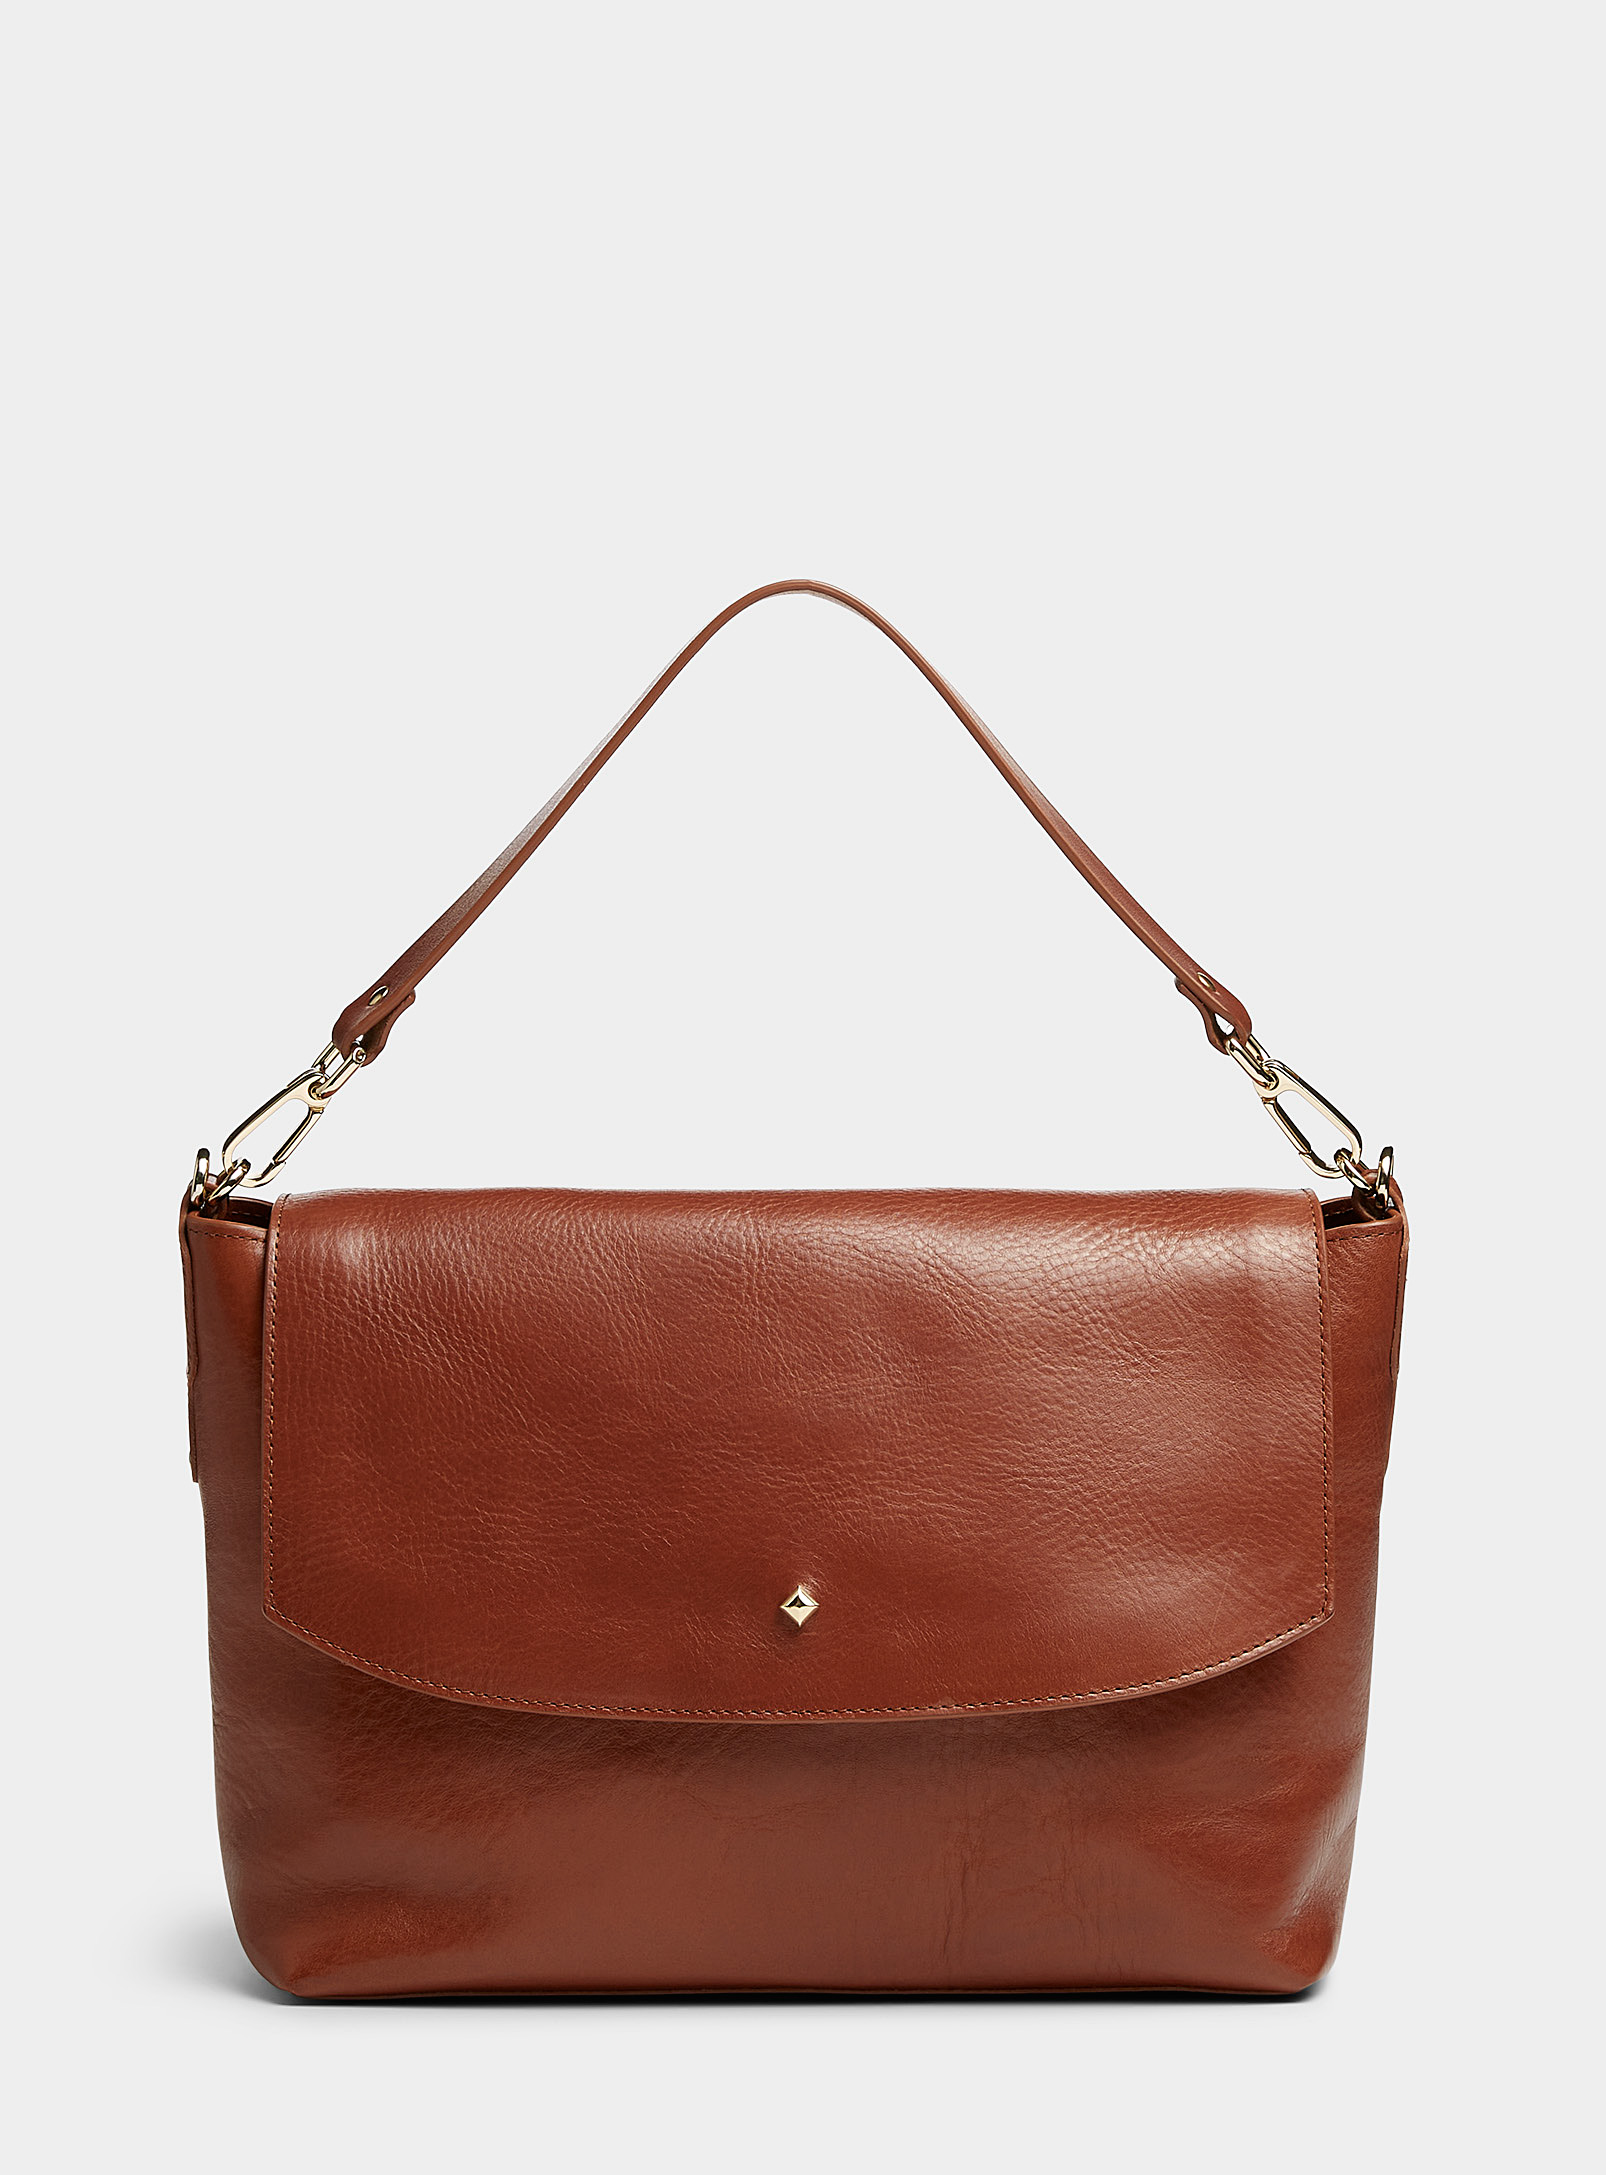 Herbert Frere Soeur Benson Minimalist Leather Flap Bag In Brown